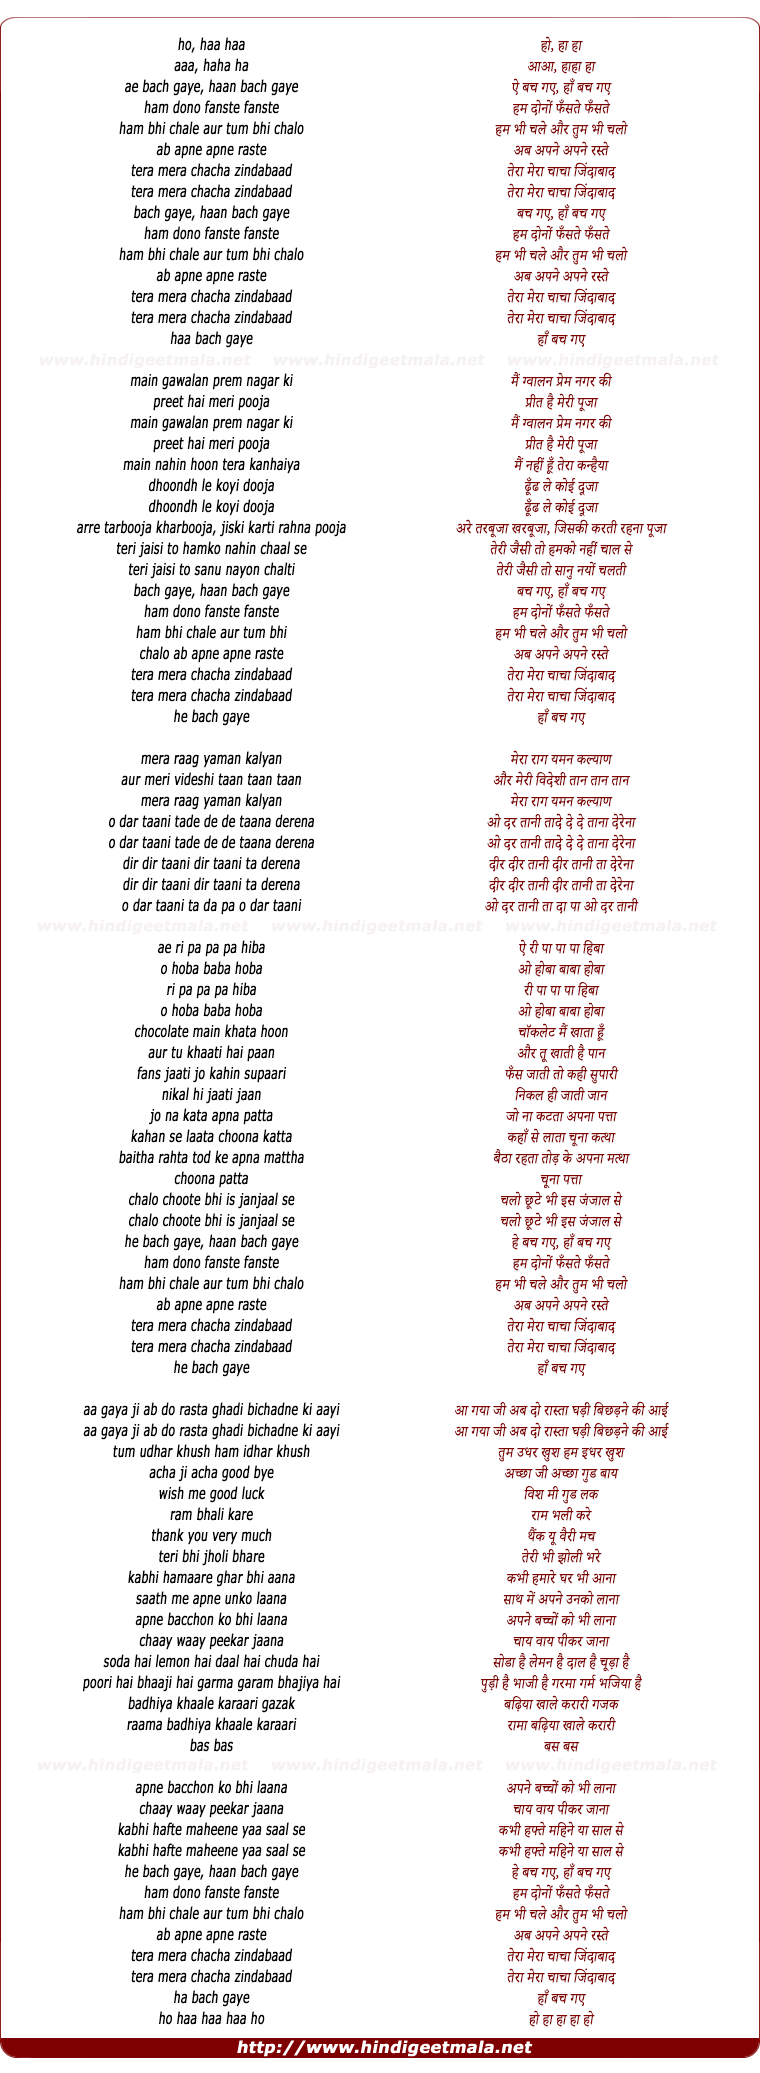 lyrics of song Ae Bach Gaye, Haan Bach Gaye, Ham Dono Phanste Phanste (Tera Mera Chacha Zindabad)